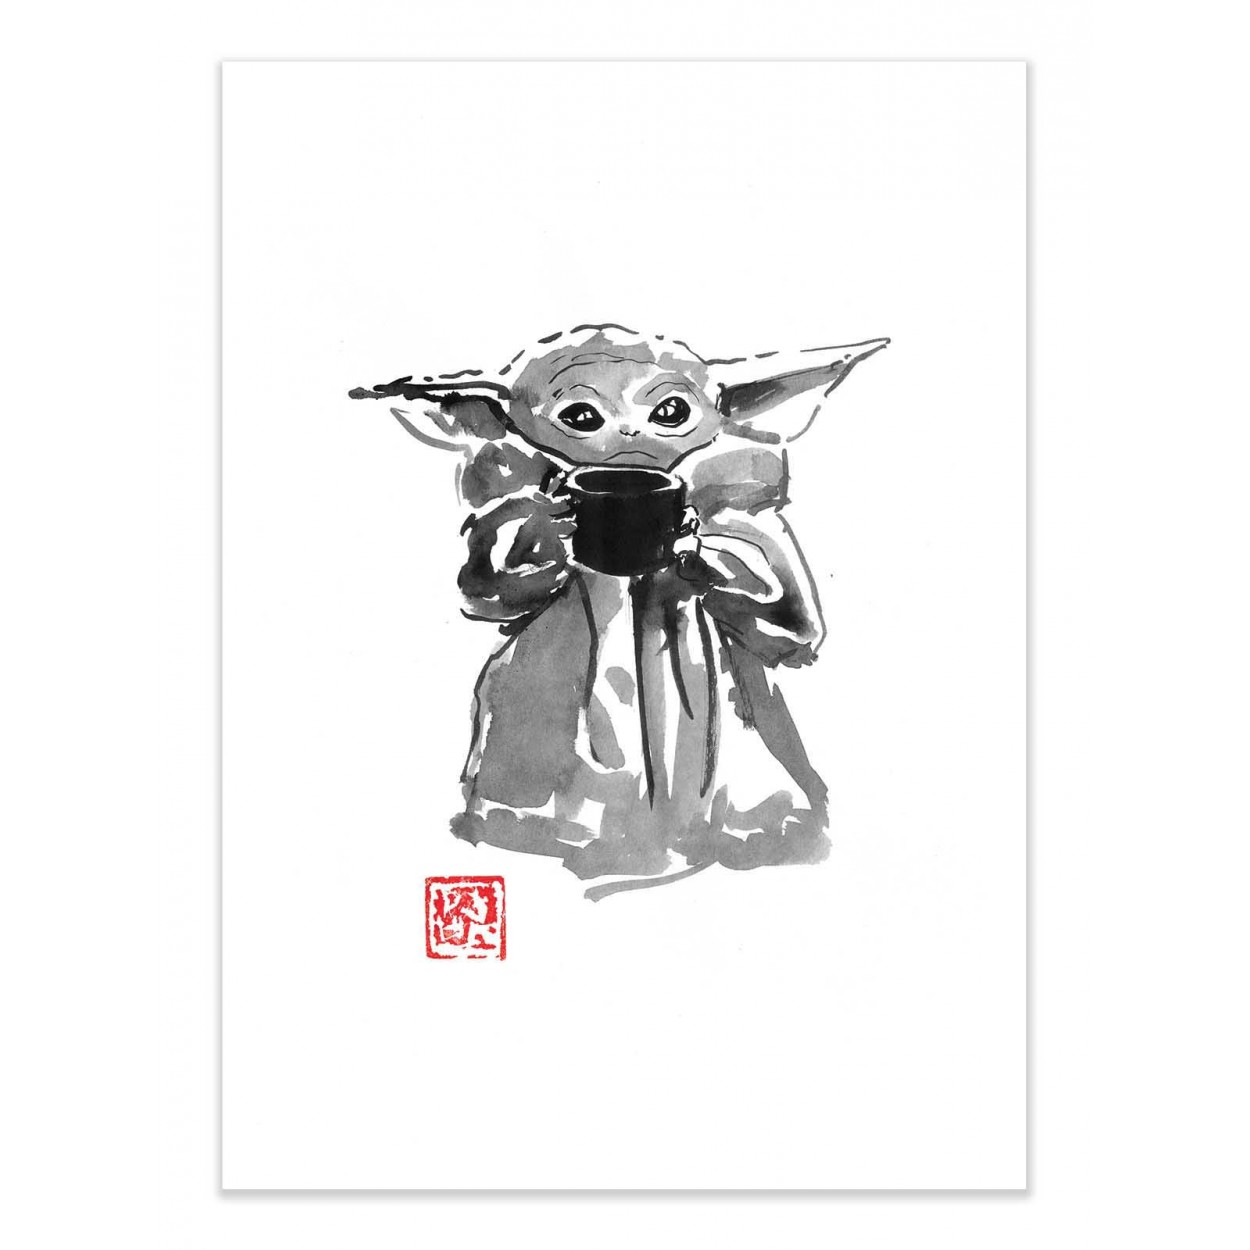 Art Poster Print Japanese Baby Yoda Mandalorian By Pechane Sumie